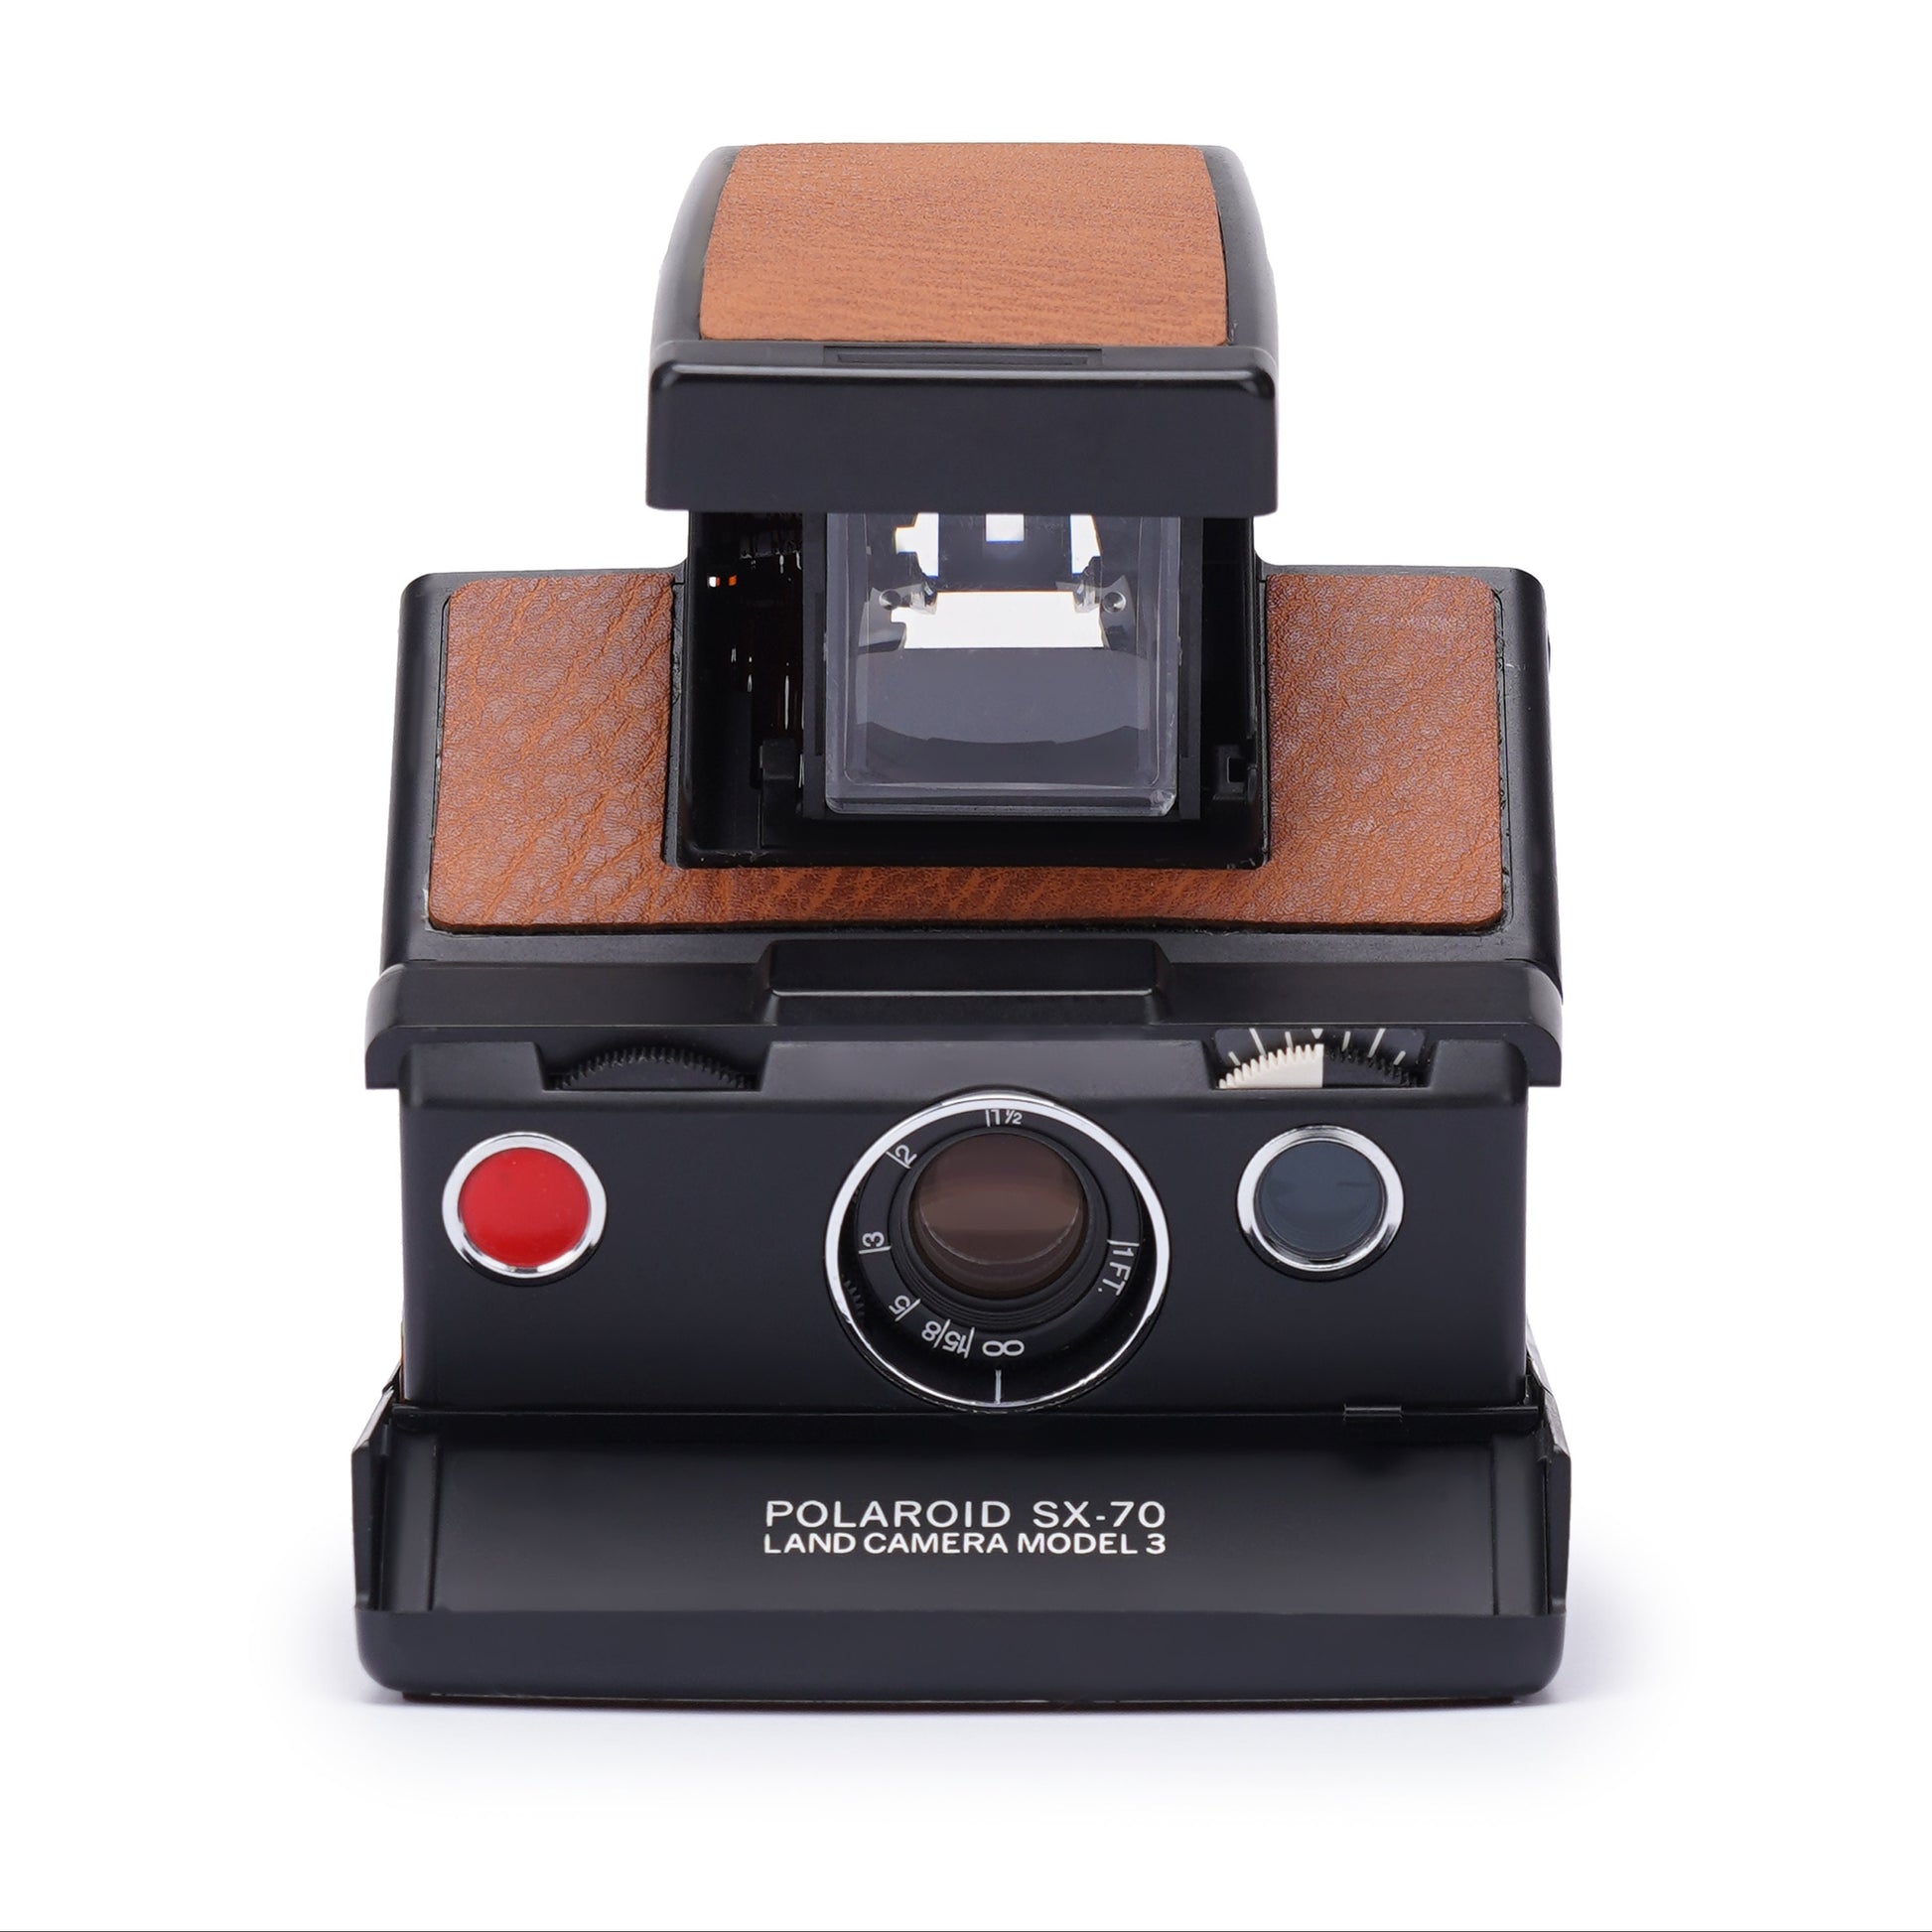 Vintage Polaroid SX-70 Instant Film Camera Model 3 fully Black body New Brown leather Fully reskinned